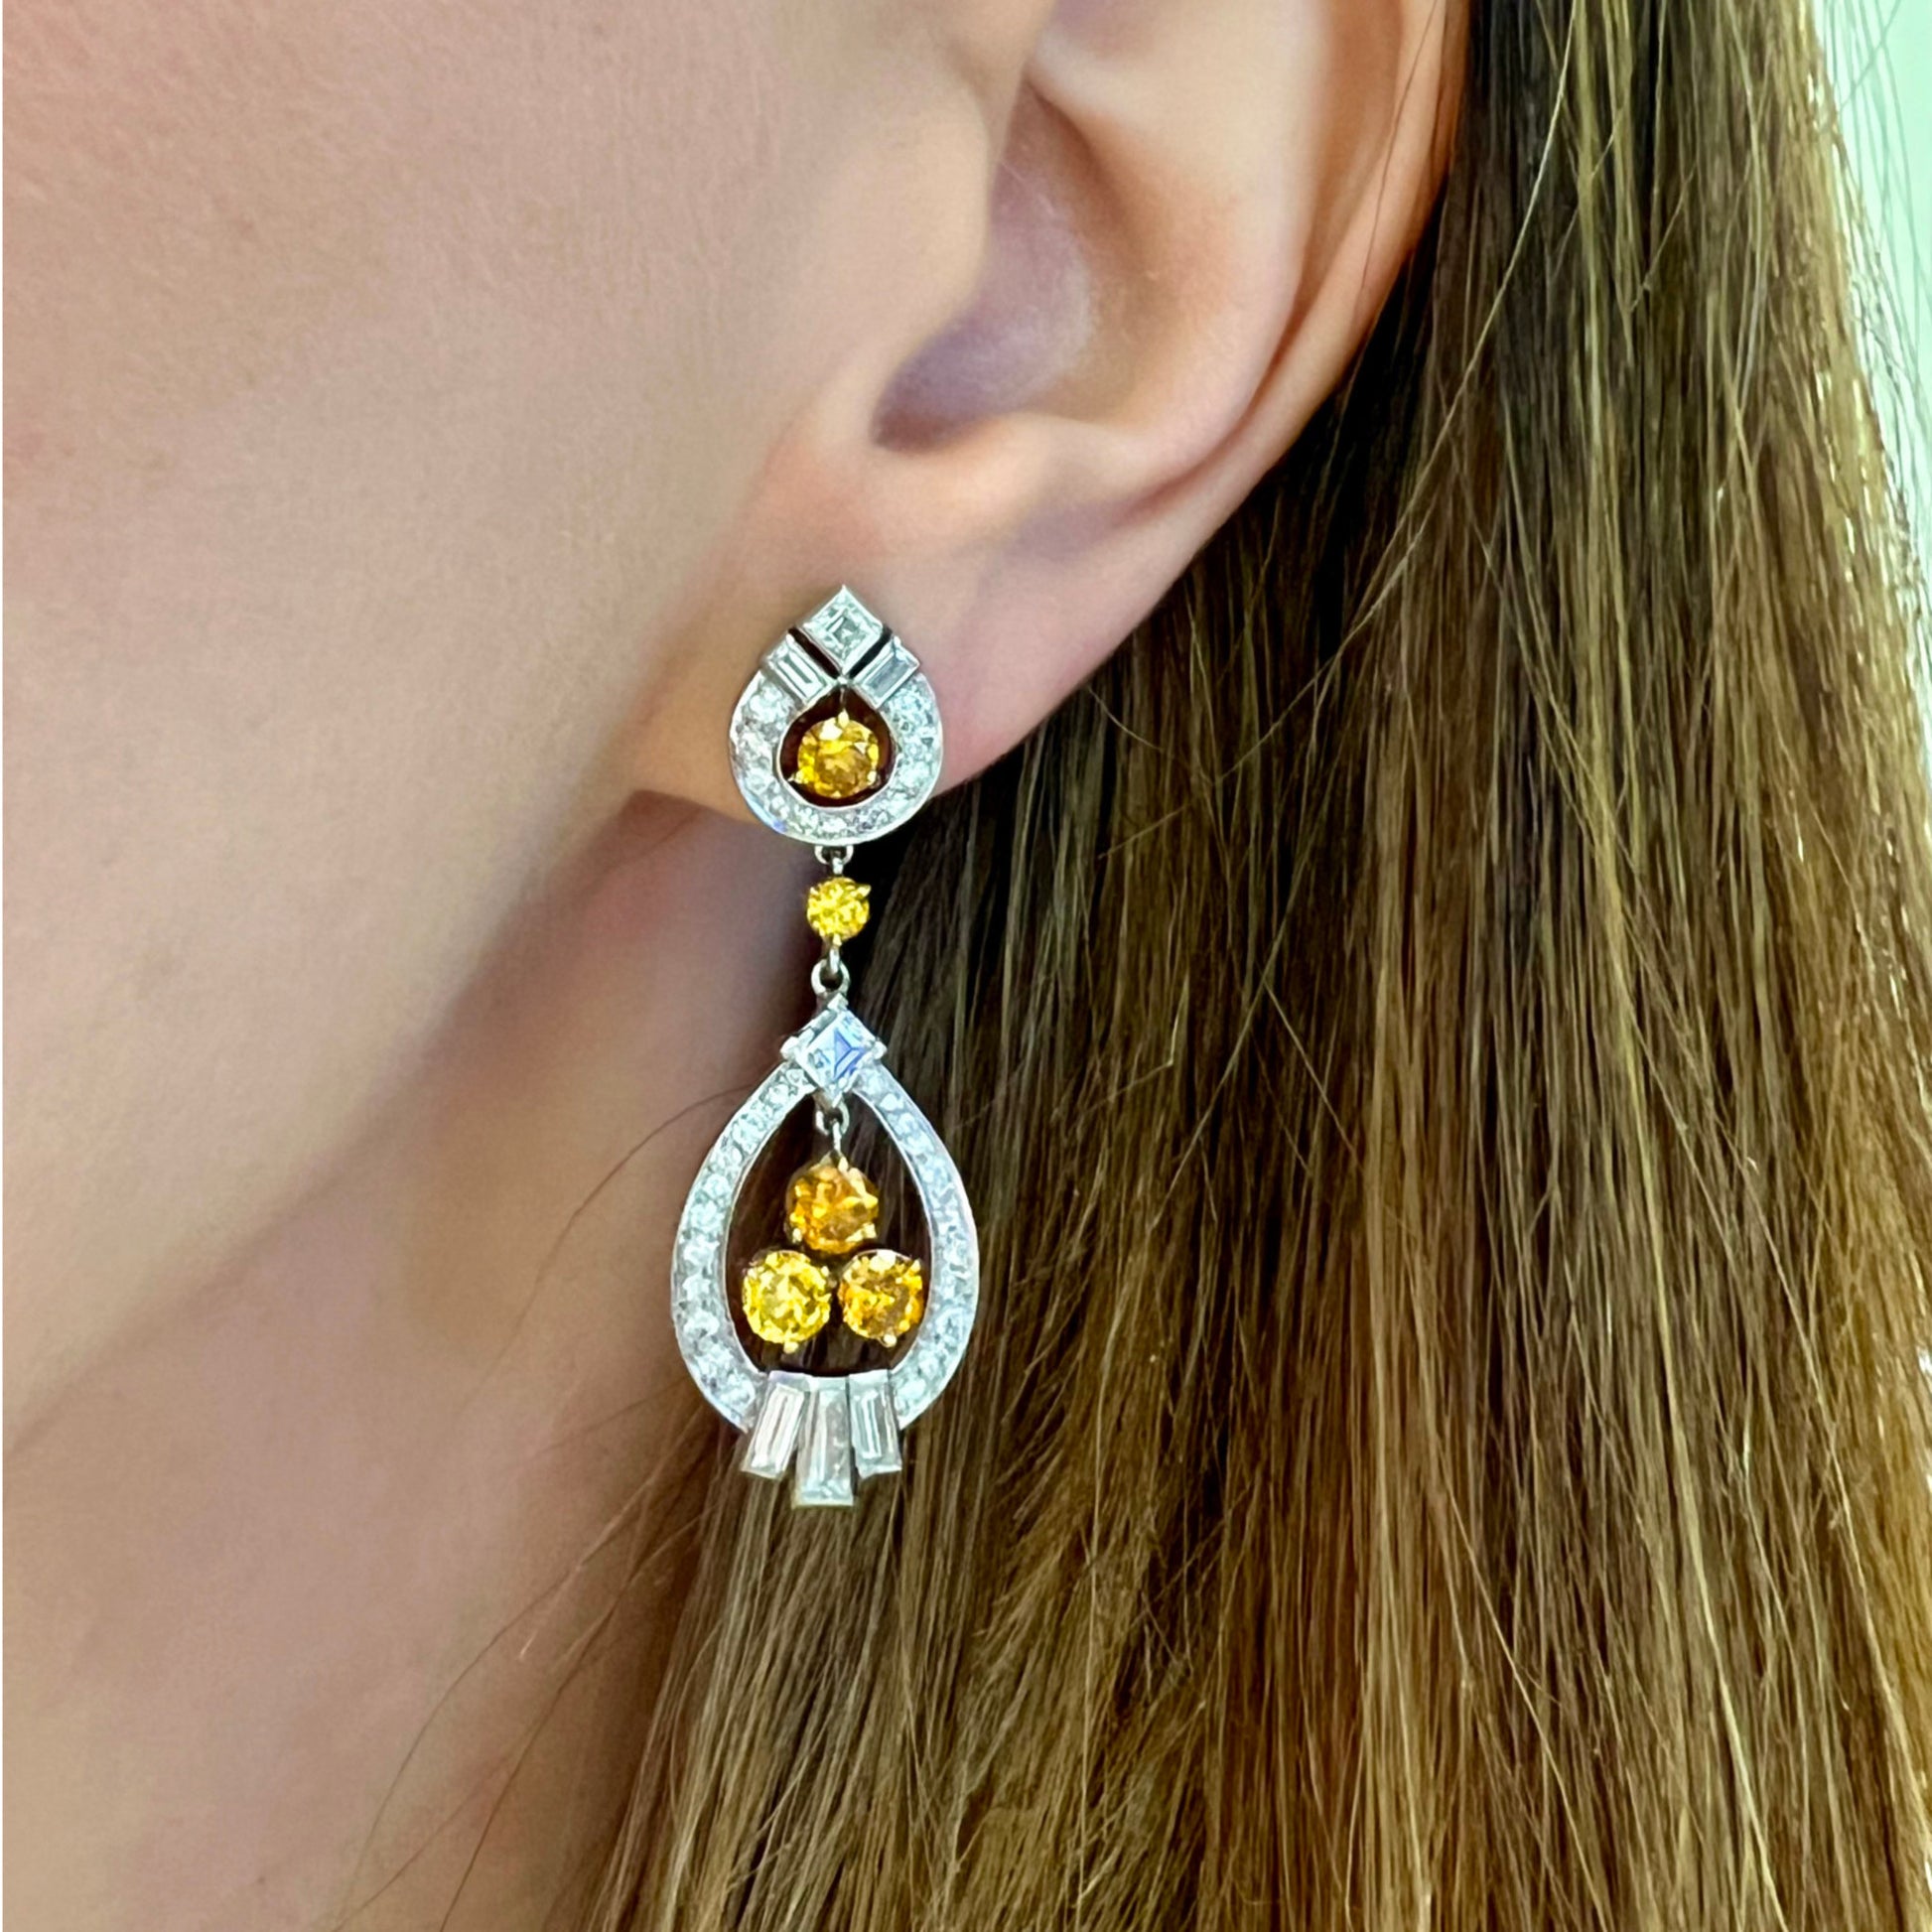 Tiffany & Co. Art Deco Palladium Diamond Earrings on ear